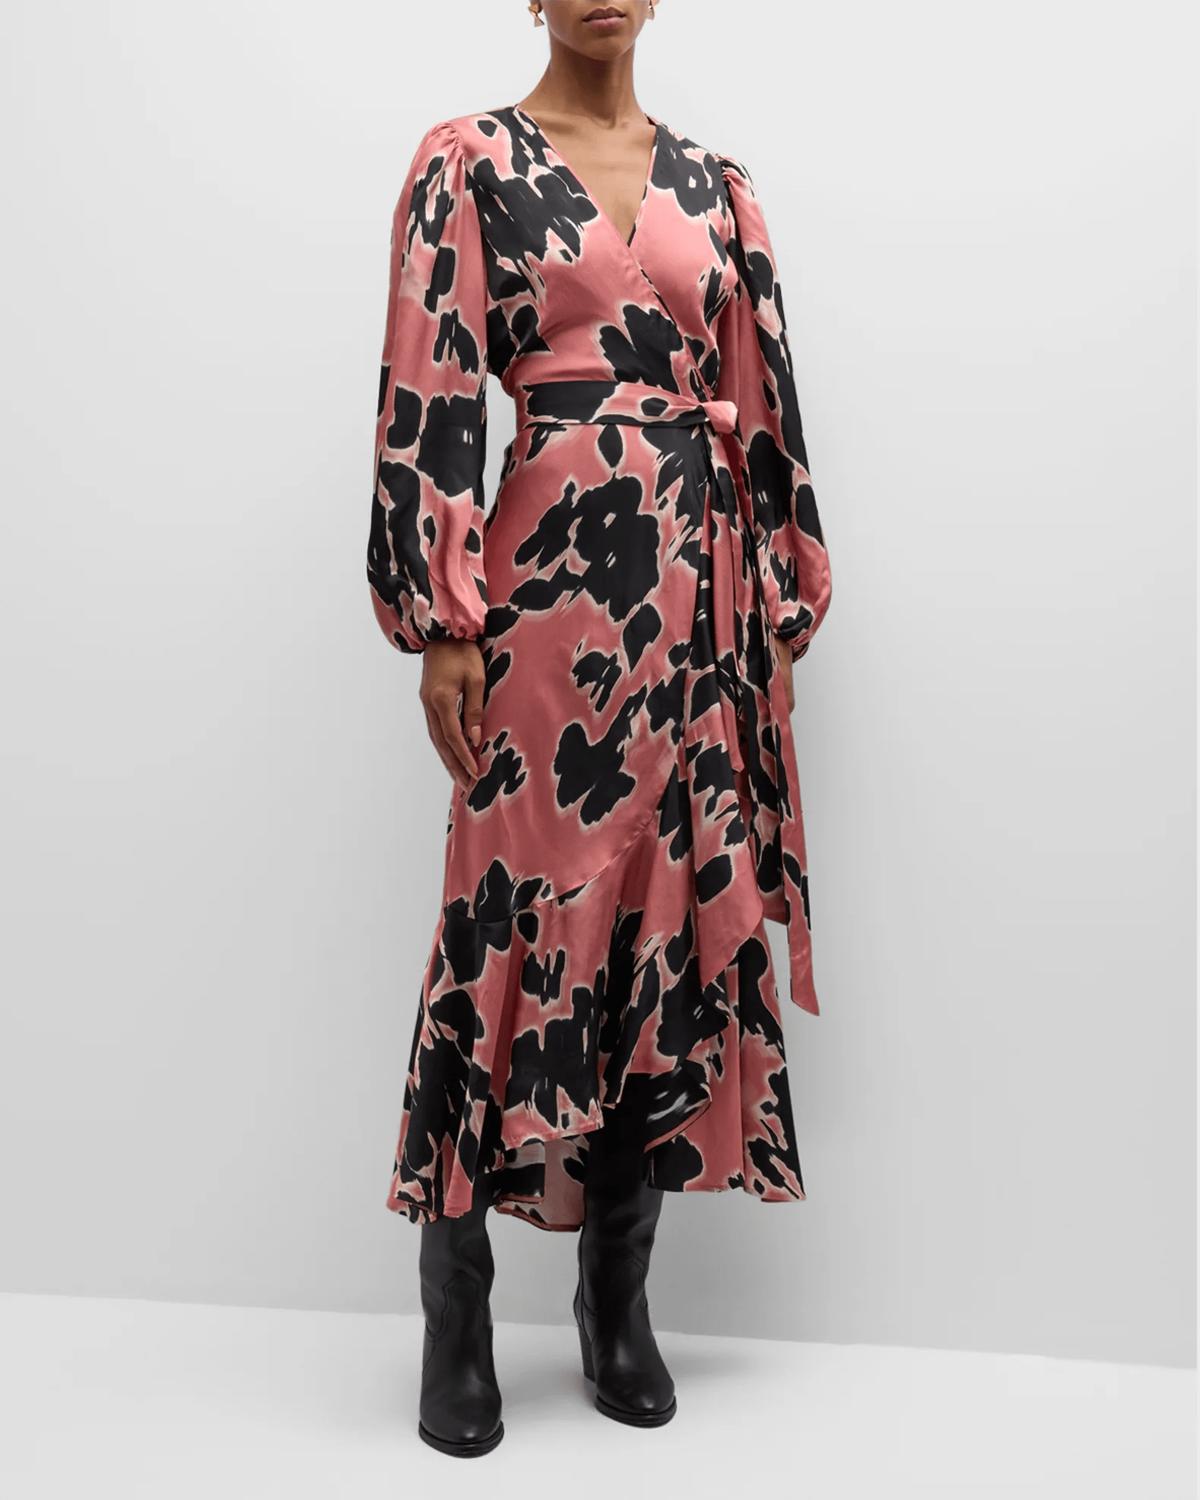 Tanya Taylor Long Sleeve Blaire Dress In Garnet Rose Multi